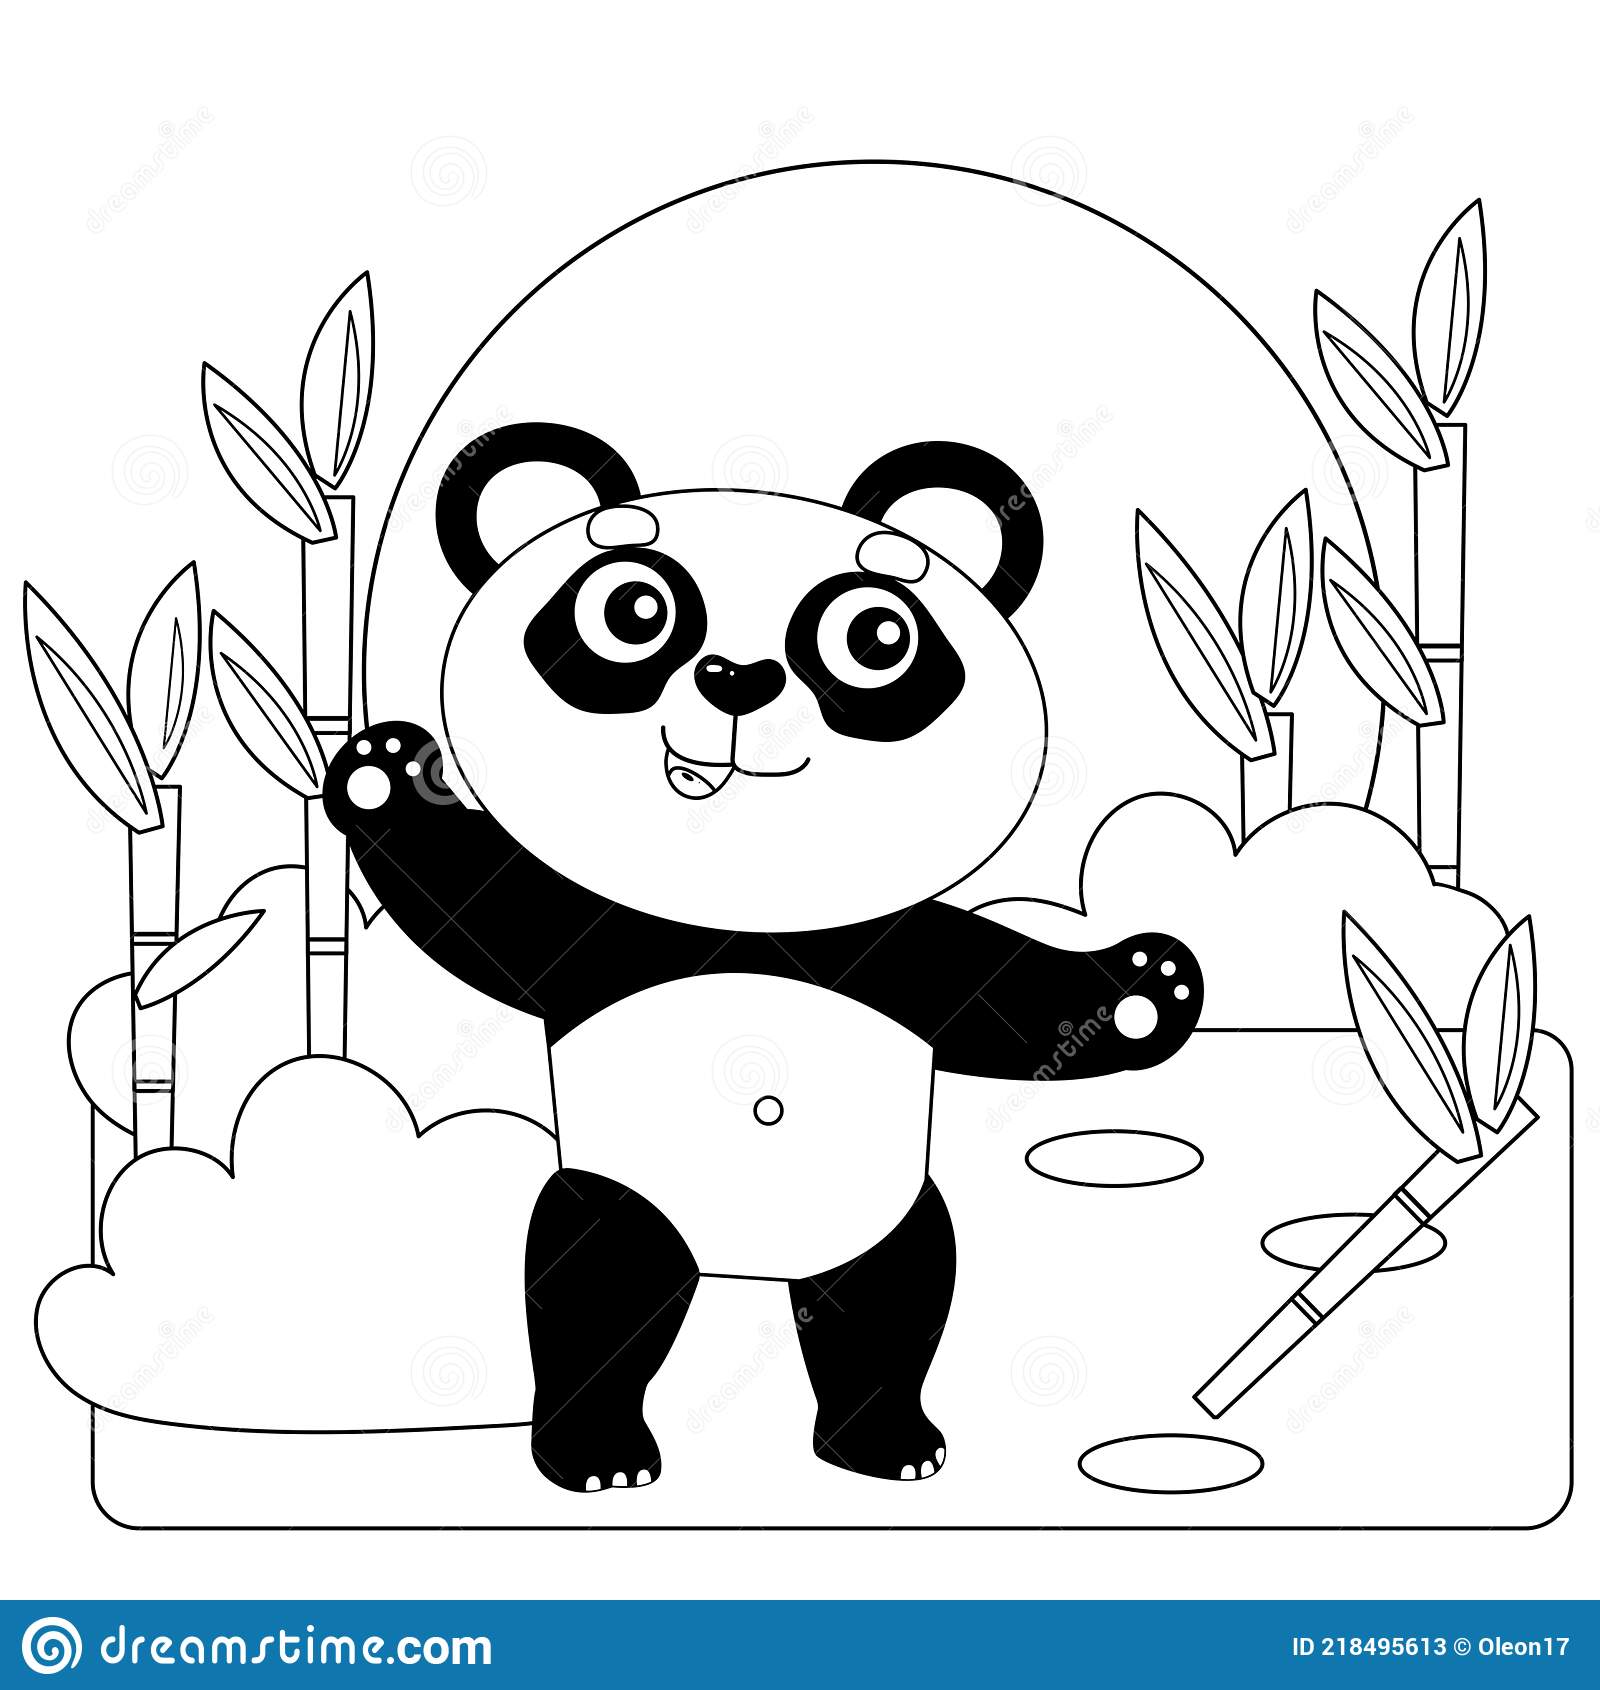 Coloring page blissful little panda